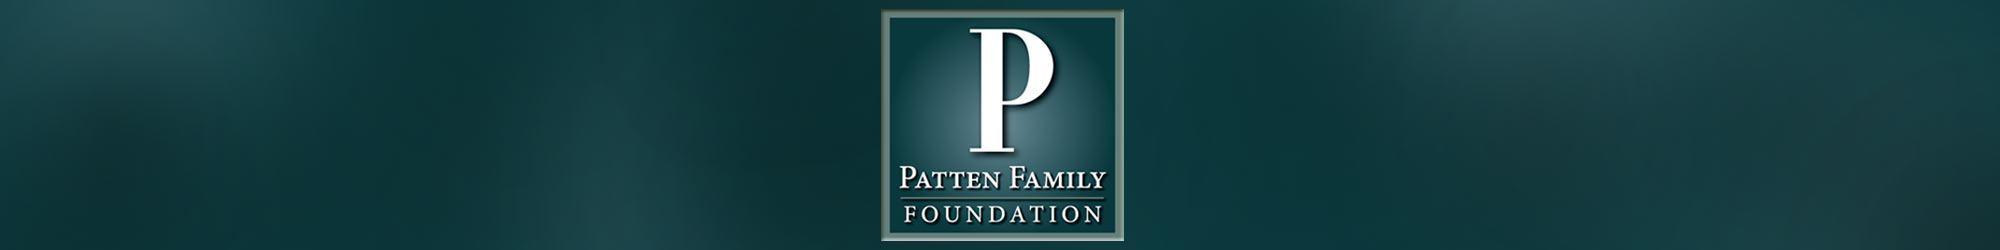 Patten Family Foundation